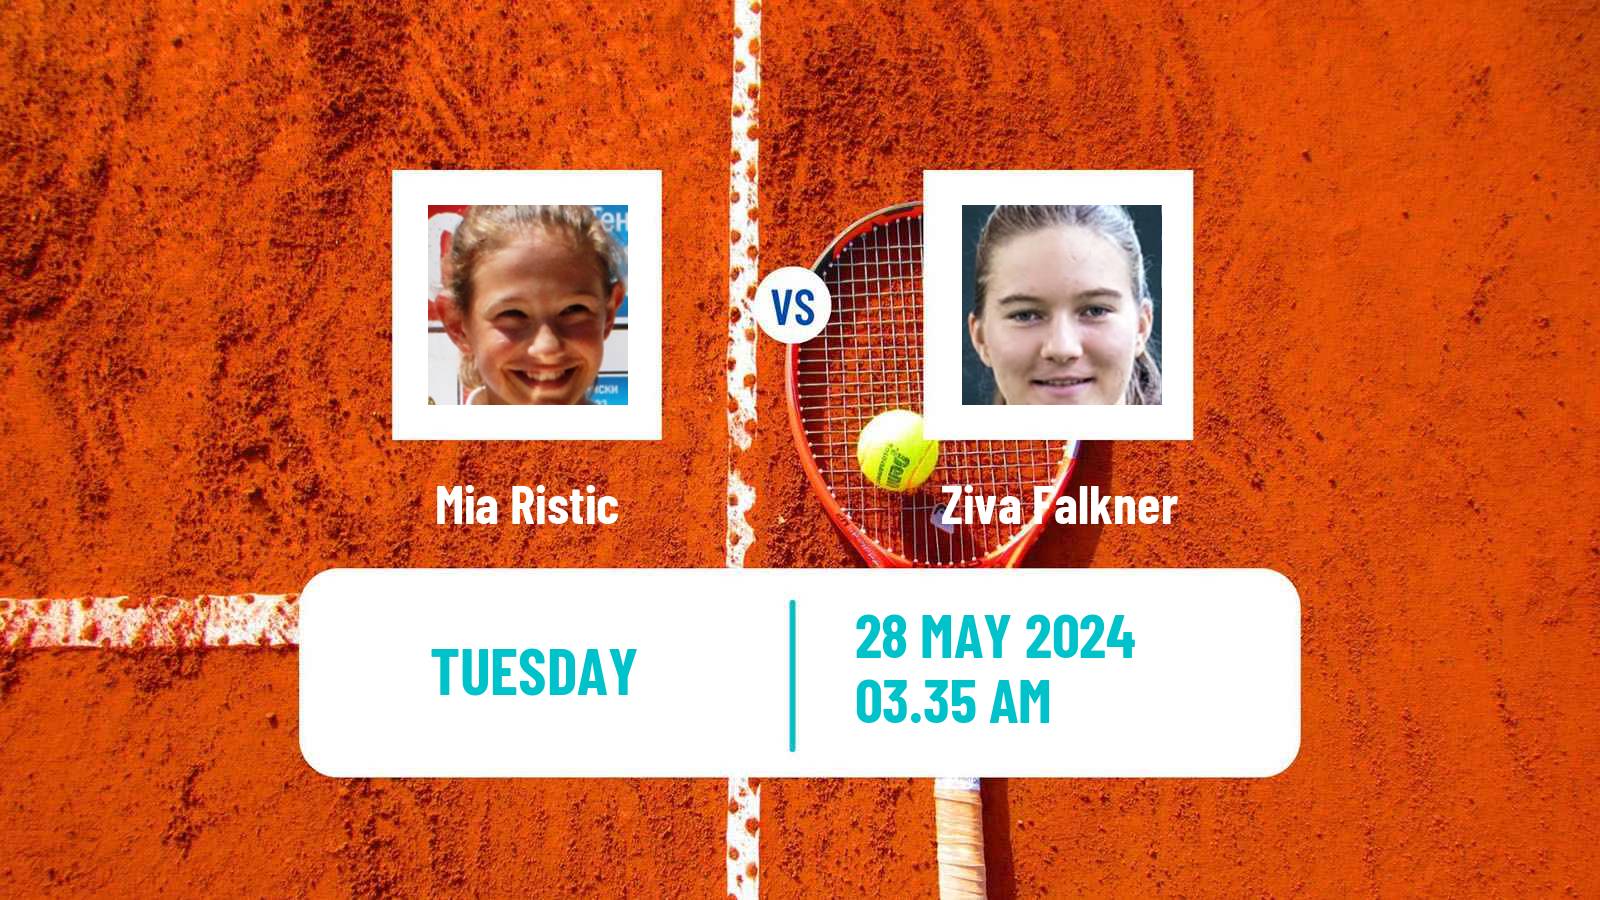 Tennis ITF W50 Otocec 2 Women Mia Ristic - Ziva Falkner